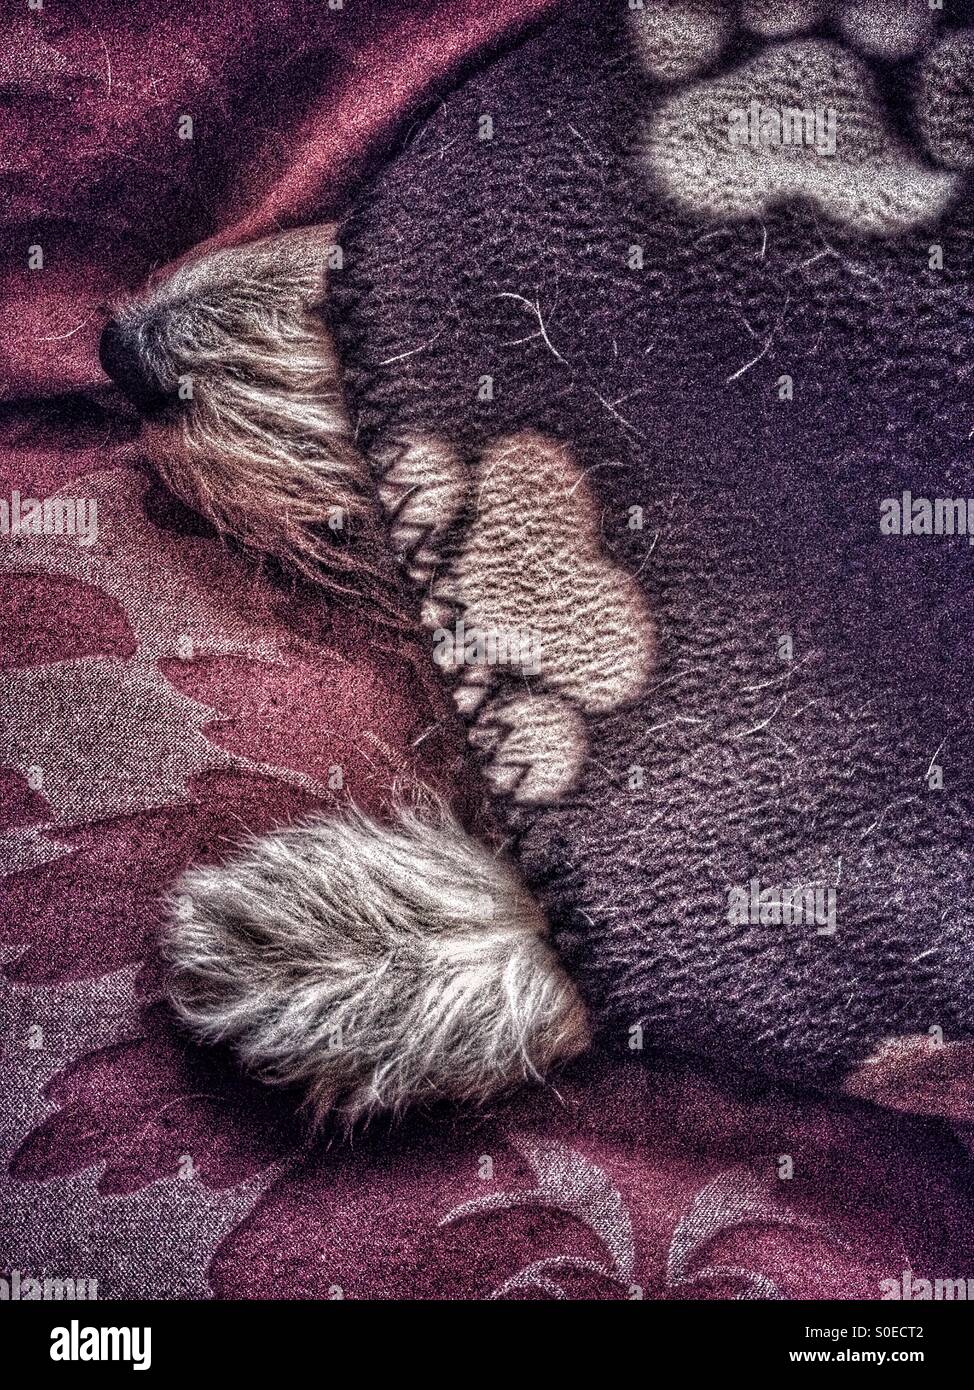 Dog sleeping under blanket Stock Photo